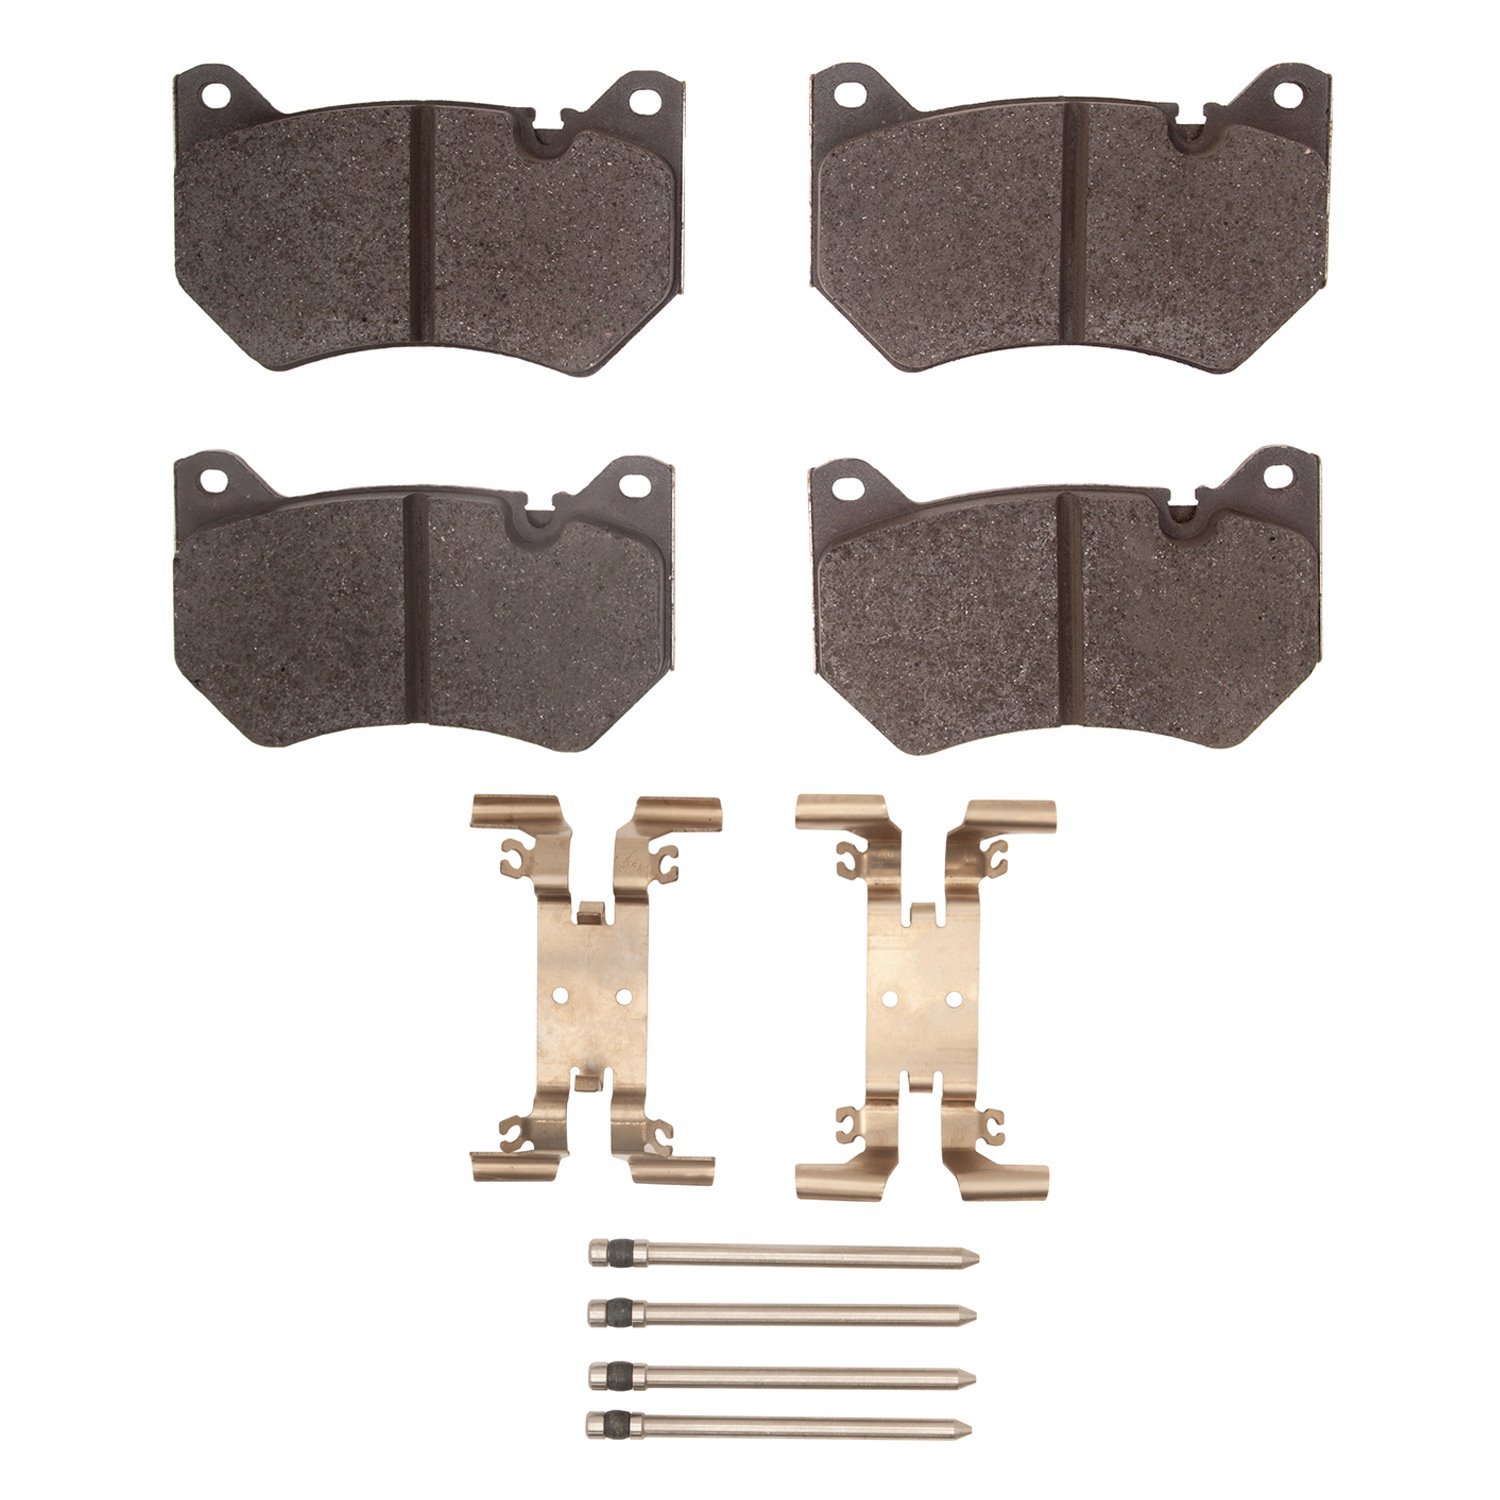 1551-2139-01 5000 Advanced Ceramic Brake Pads & Hardware Kit, Fits Select Audi/Volkswagen, Position: Front